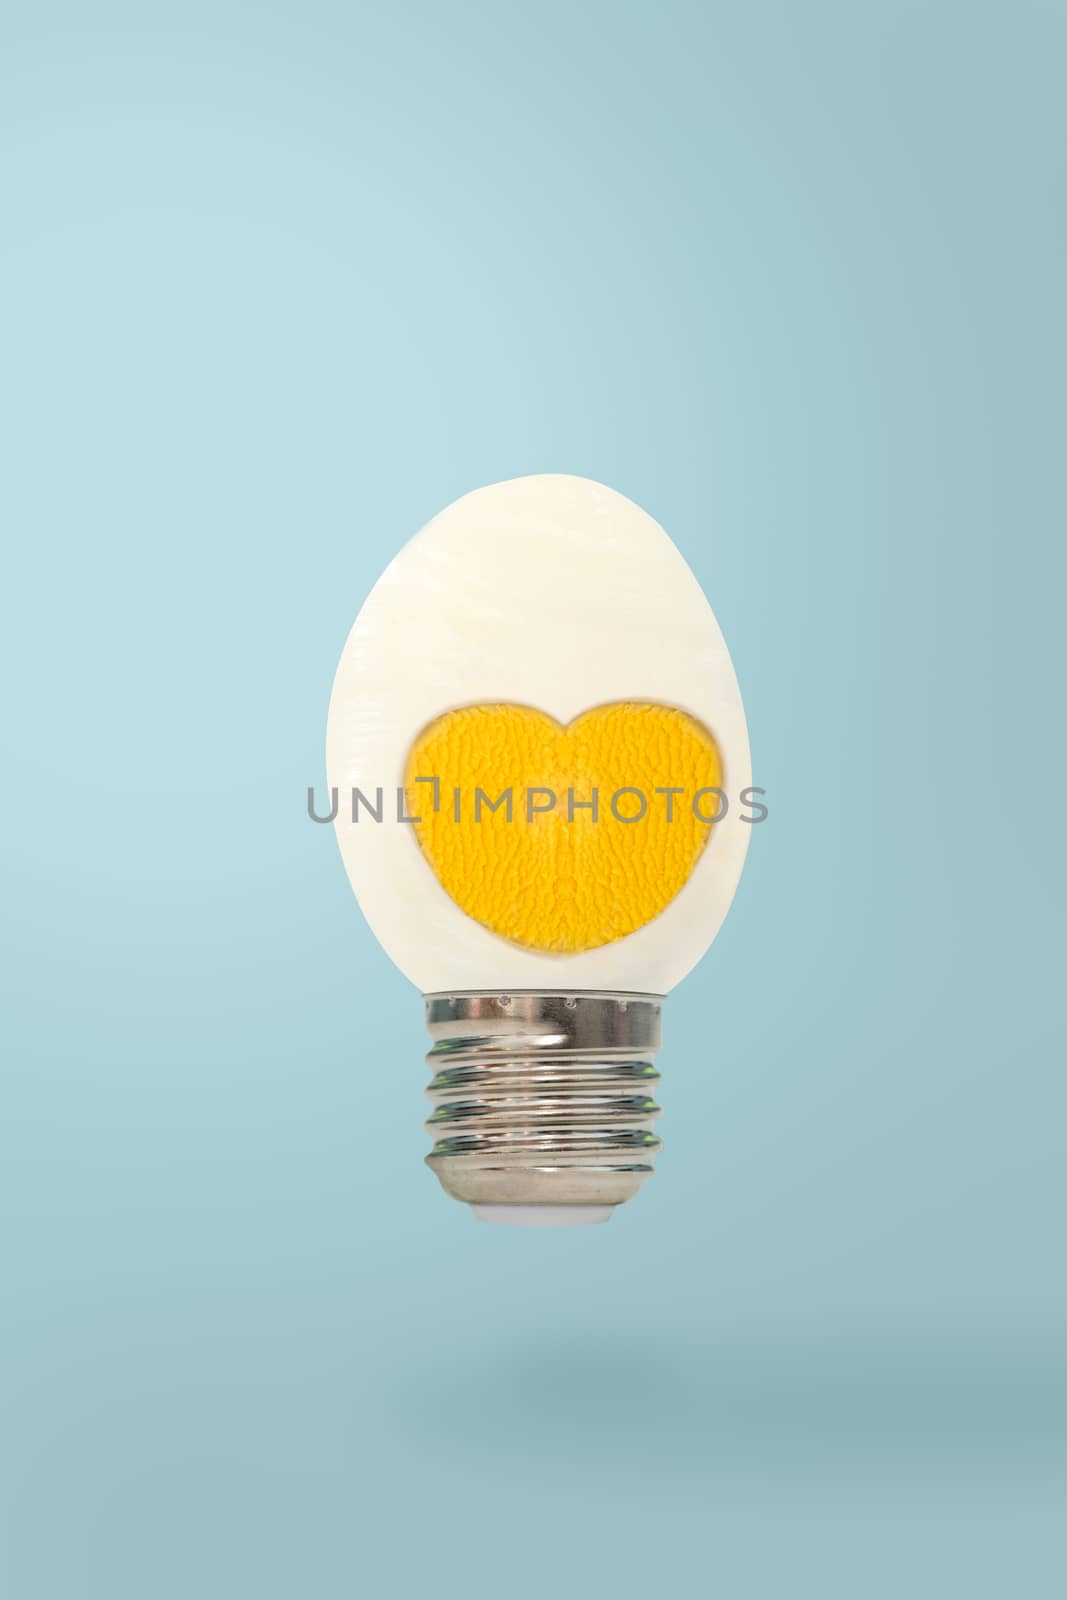 Half boiled egg with lamon blue p botton background, minimal style.